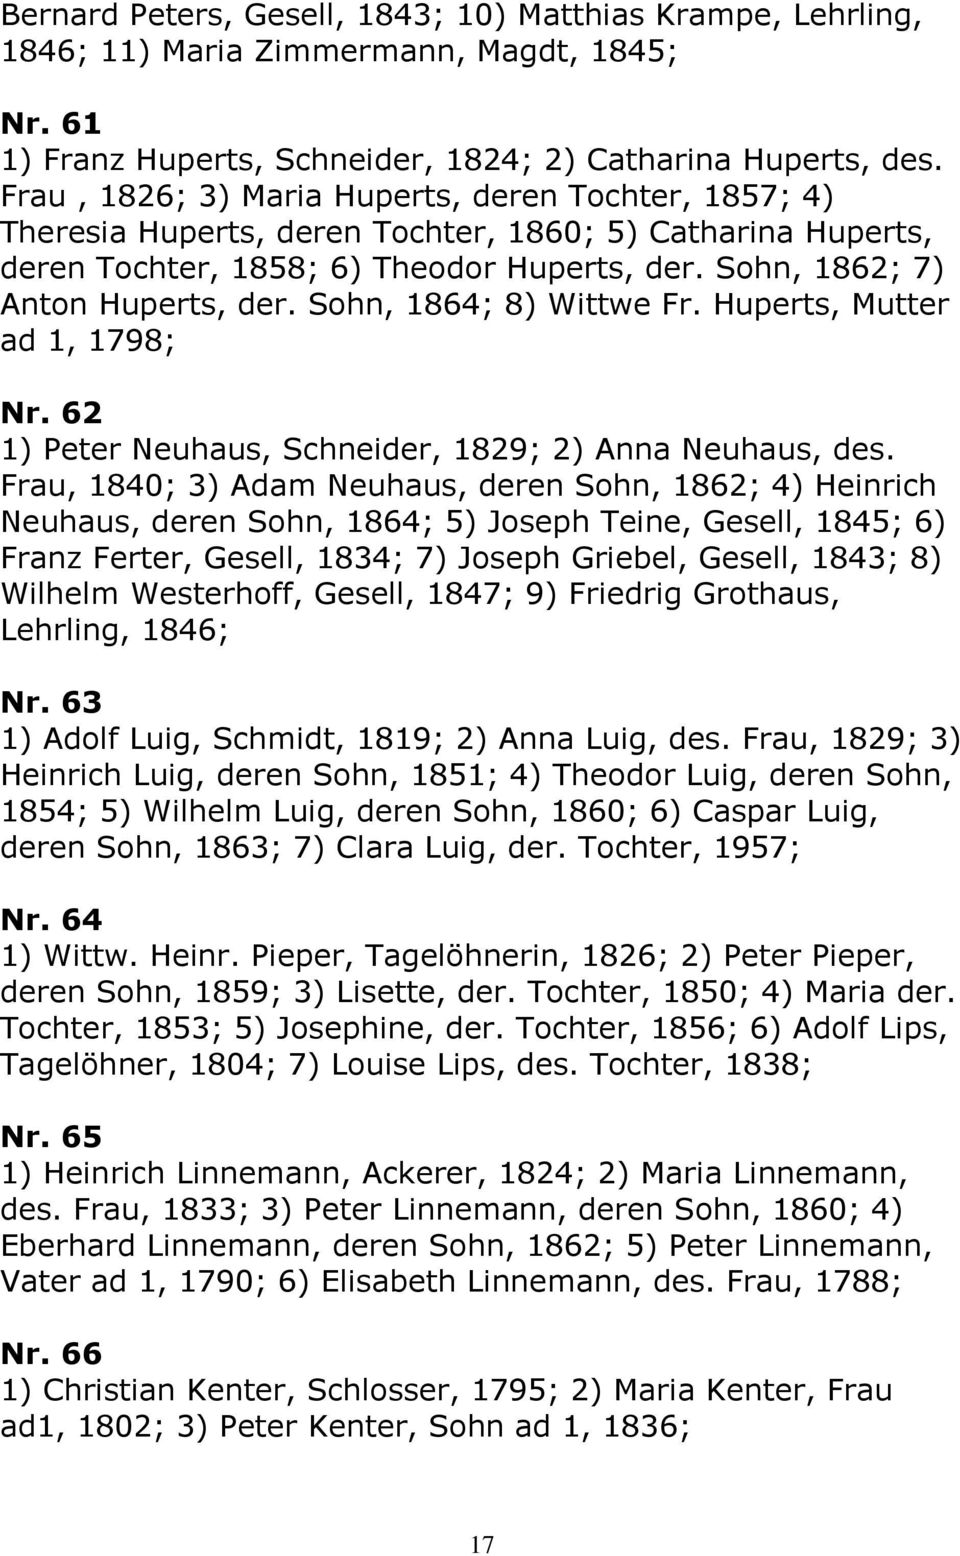 Sohn, 1864; 8) Wittwe Fr. Huperts, Mutter ad 1, 1798; Nr. 62 1) Peter Neuhaus, Schneider, 1829; 2) Anna Neuhaus, des.